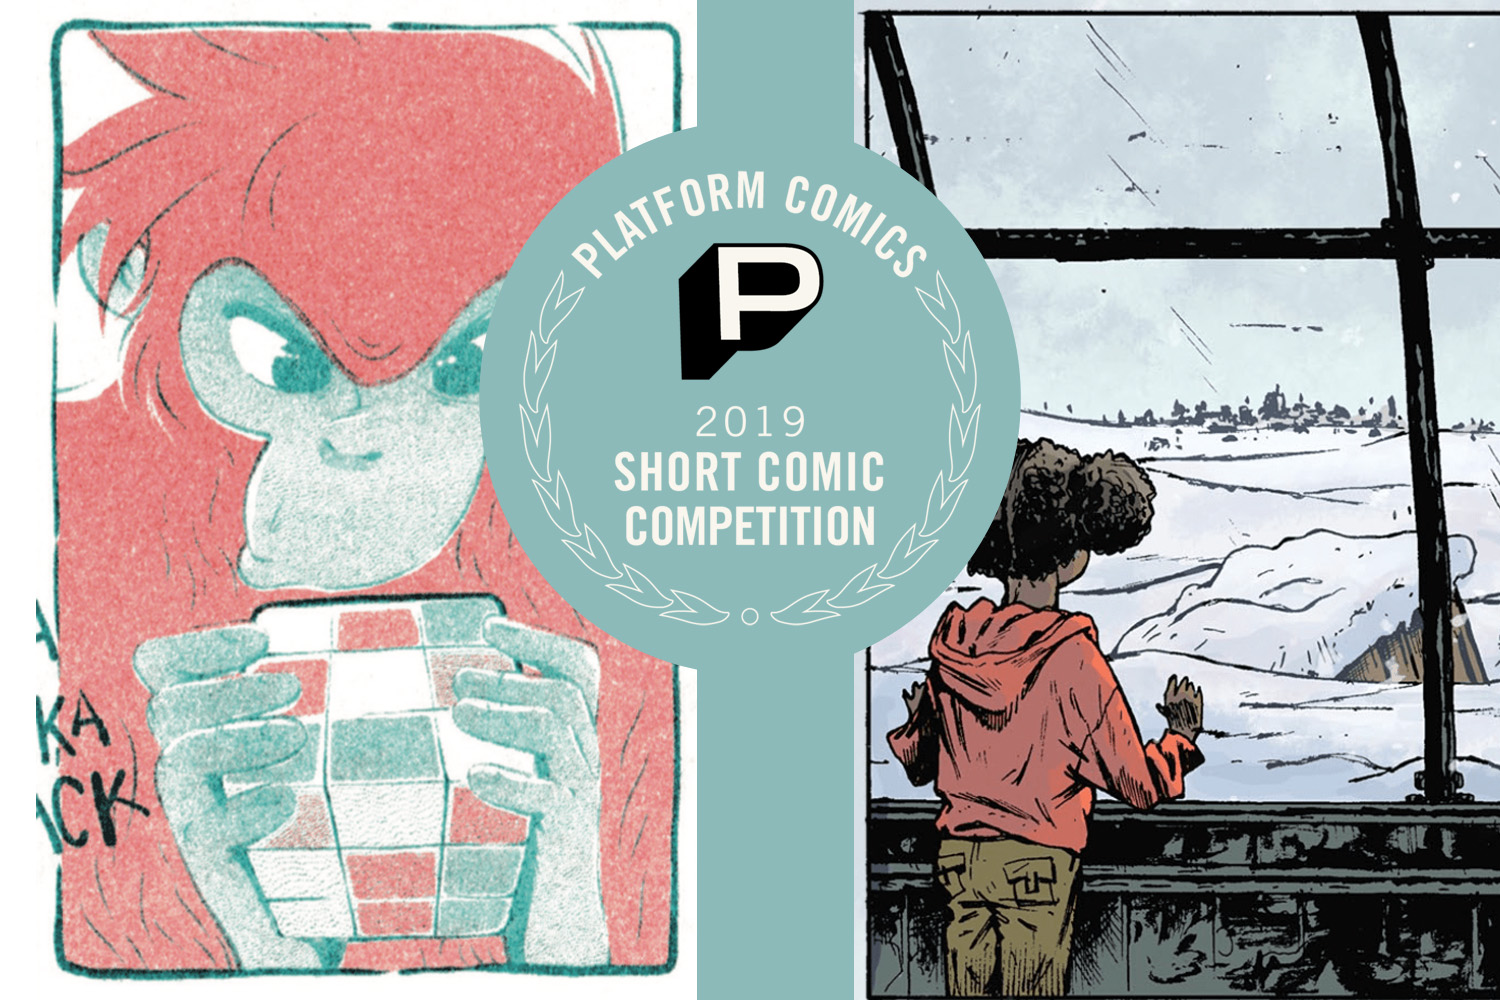 Platform Comics 2019 Short Comic Competition winner and runner-up reviews